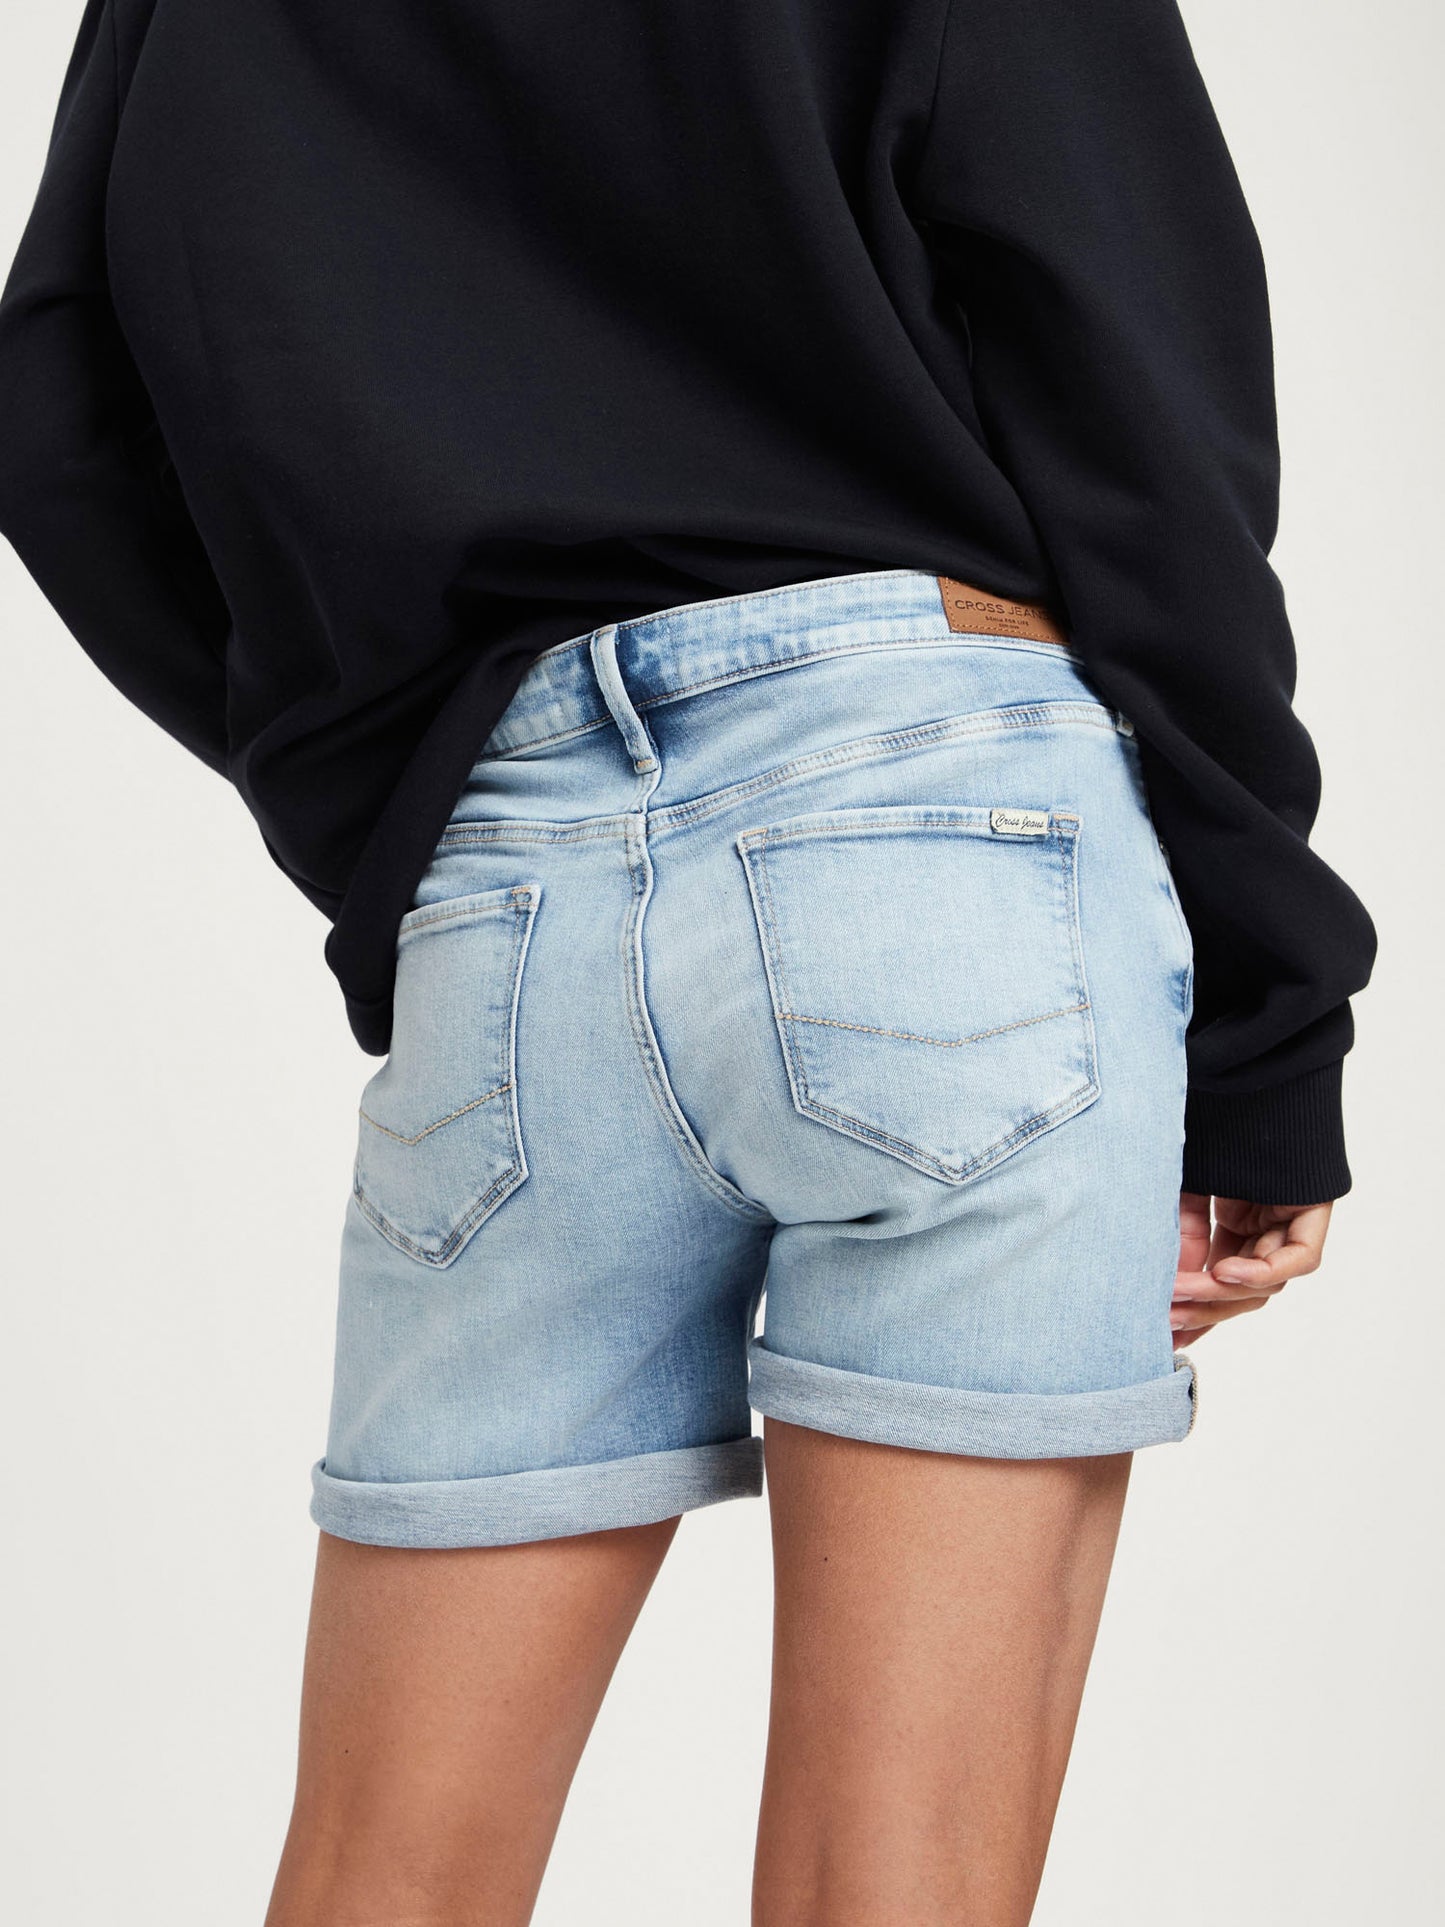 Zena Damen Jeans-Shorts Slim Fit hellblau.